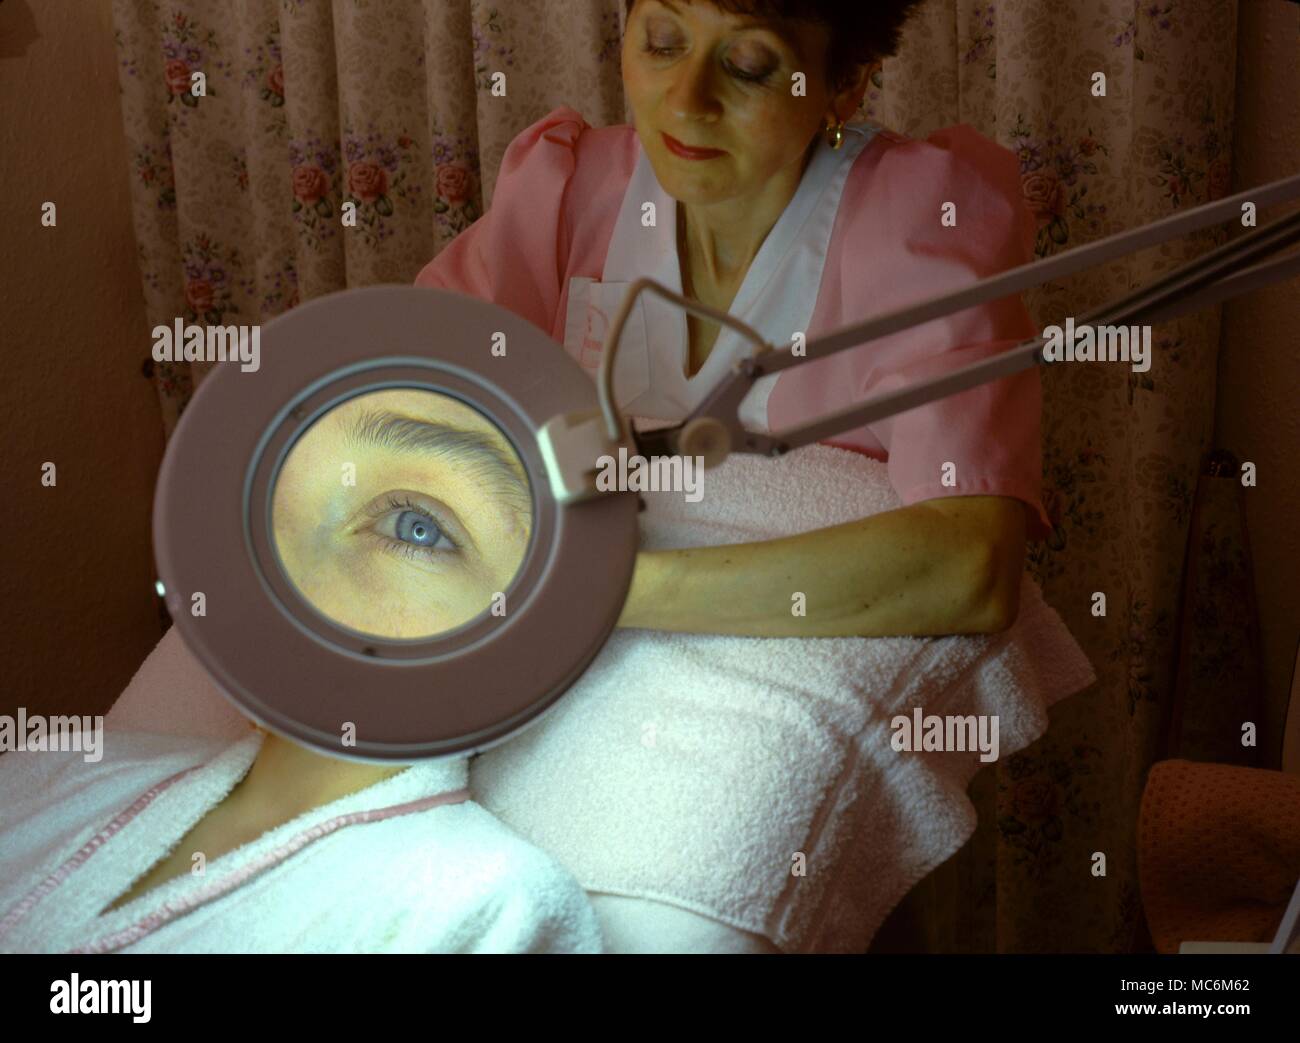 Iridology. The eye seen through a salon magnification lamp. Stock Photo